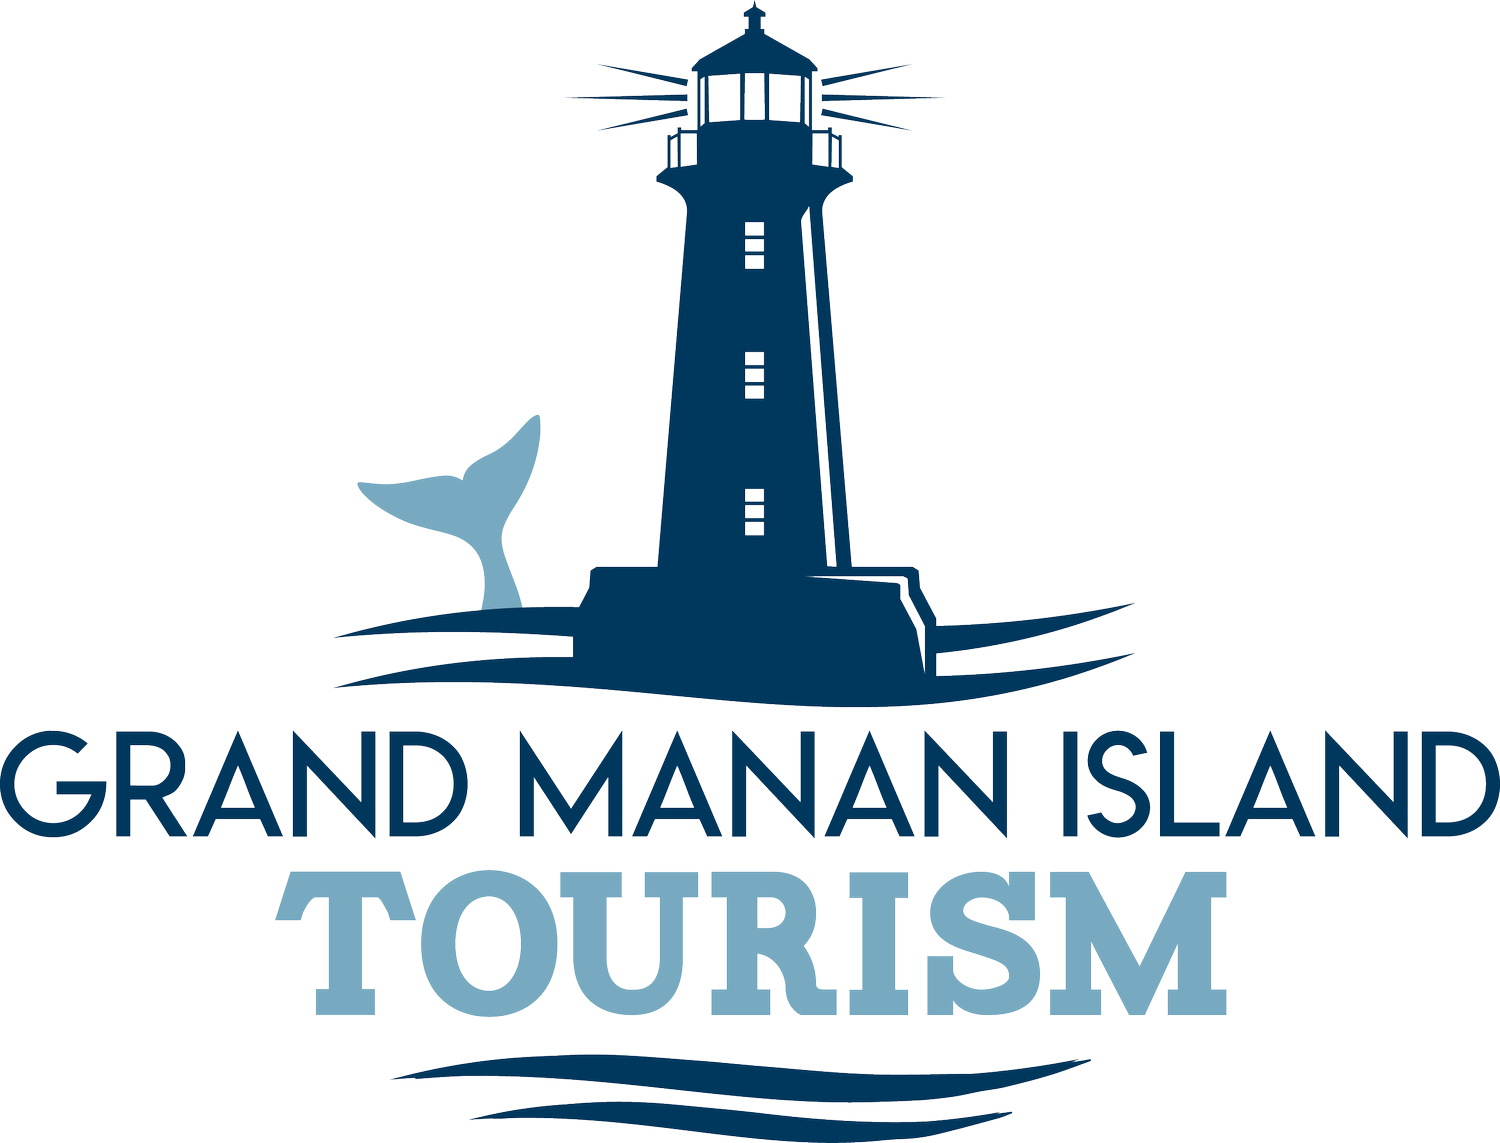 Grand Manan Island Tourism